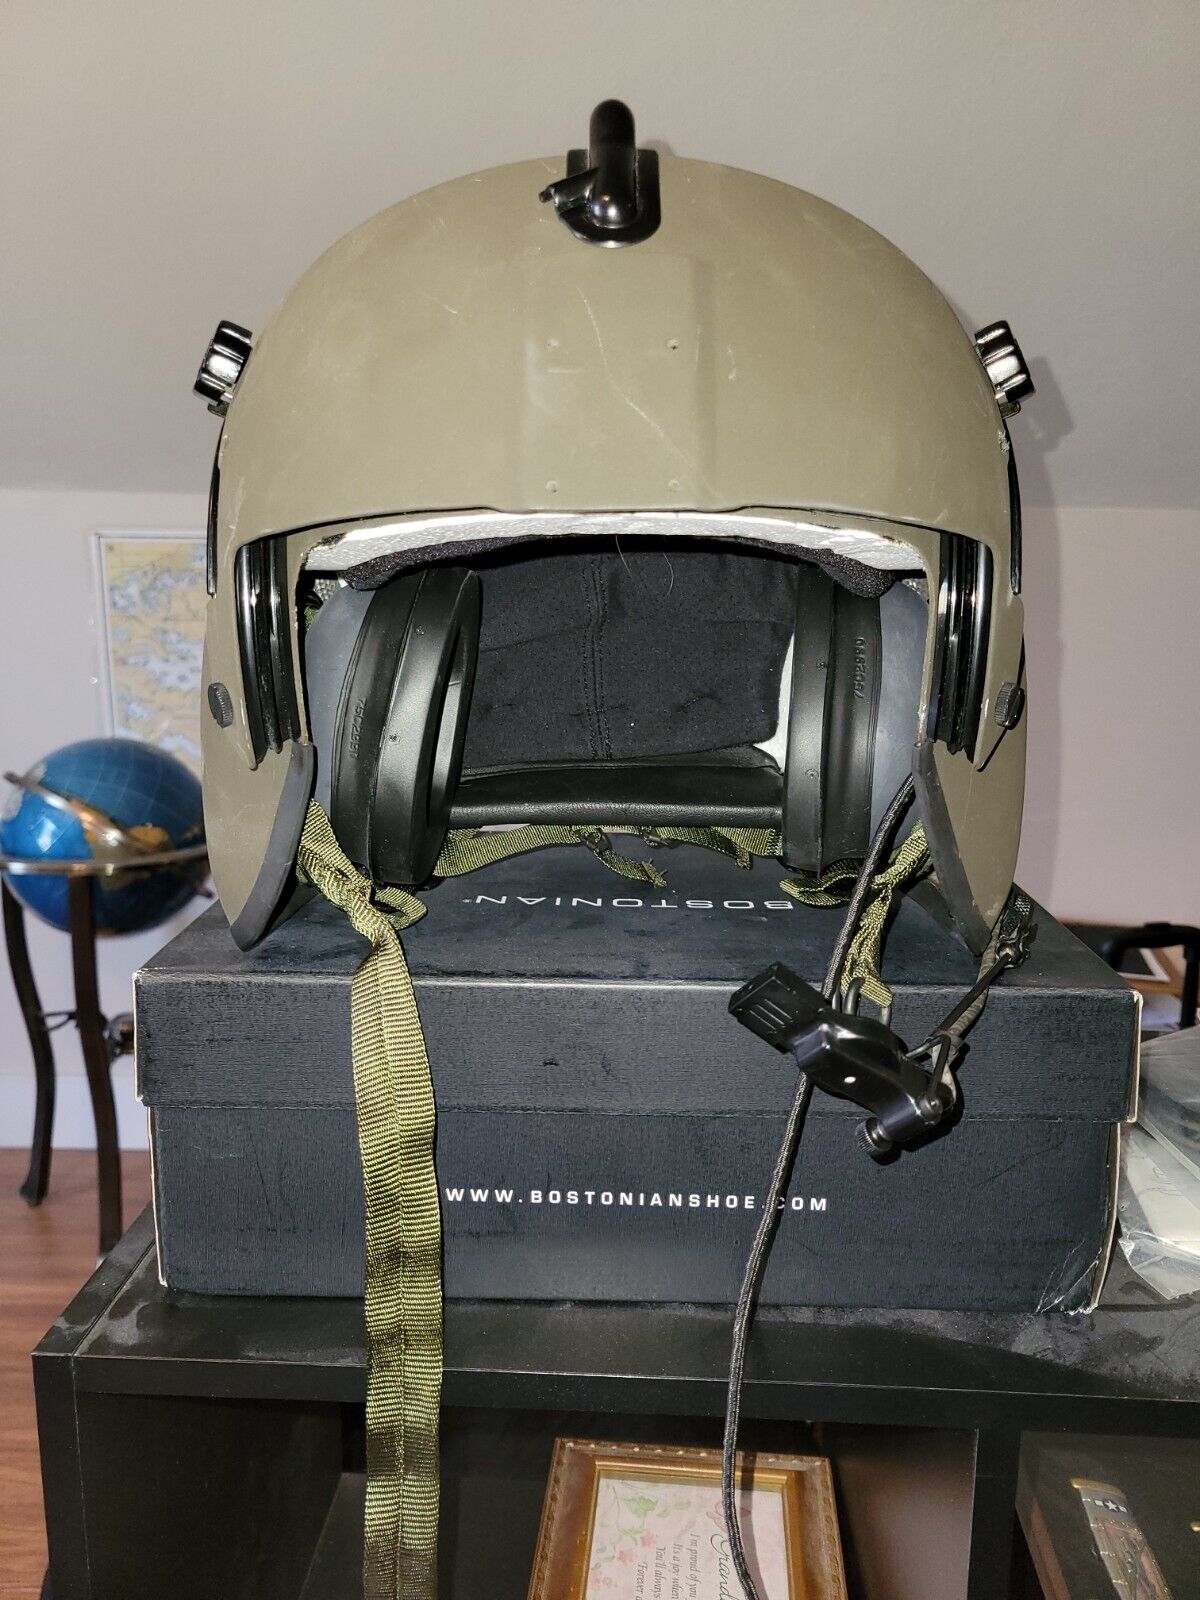 gentex hgu-56/p - flight helmet